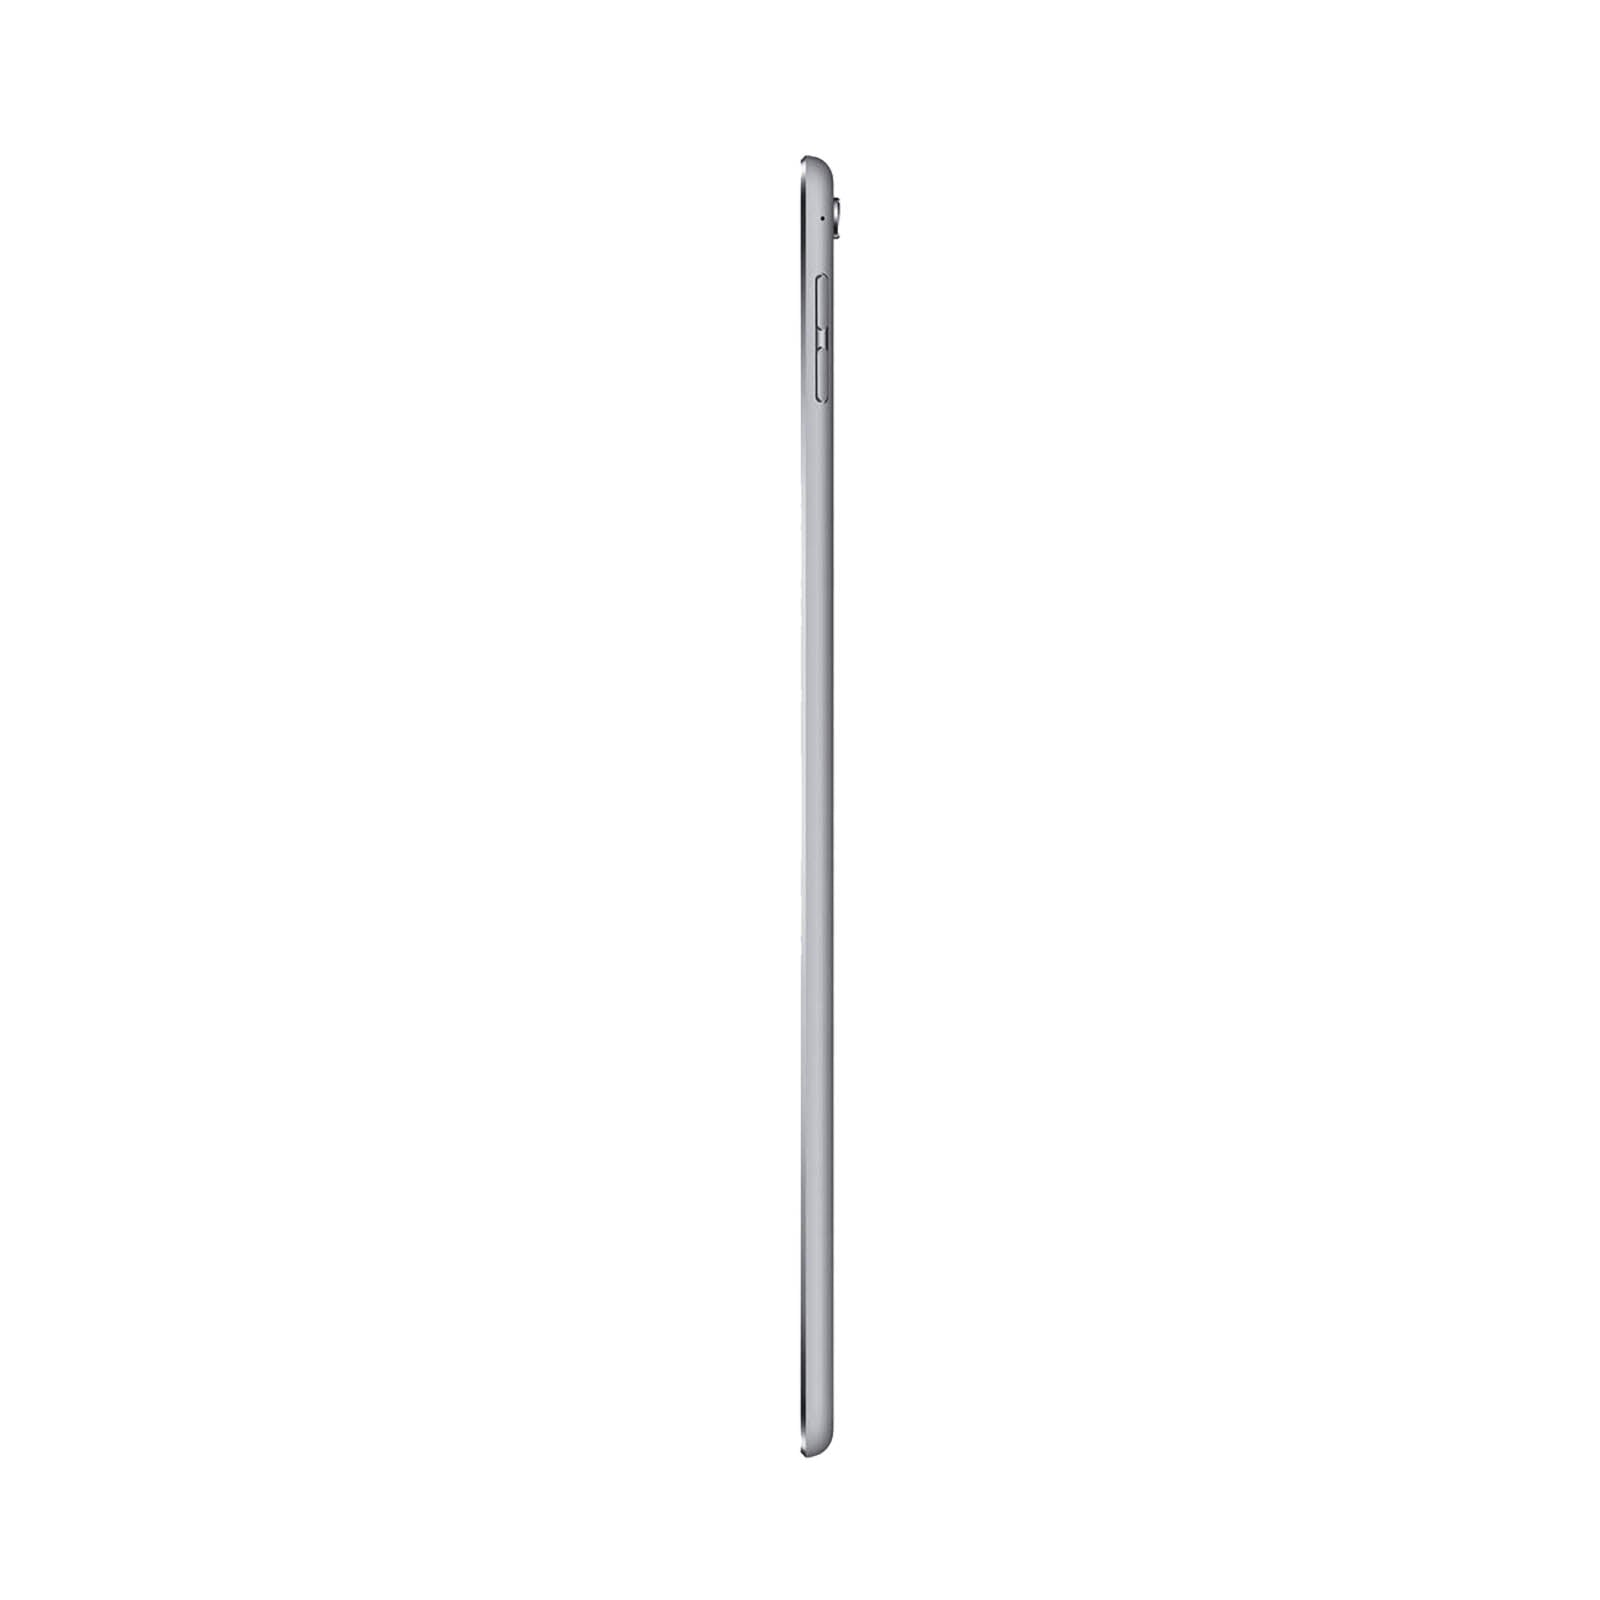 Apple iPad Pro 9.7 Zoll 32GB WiFi Grau Sehr gut